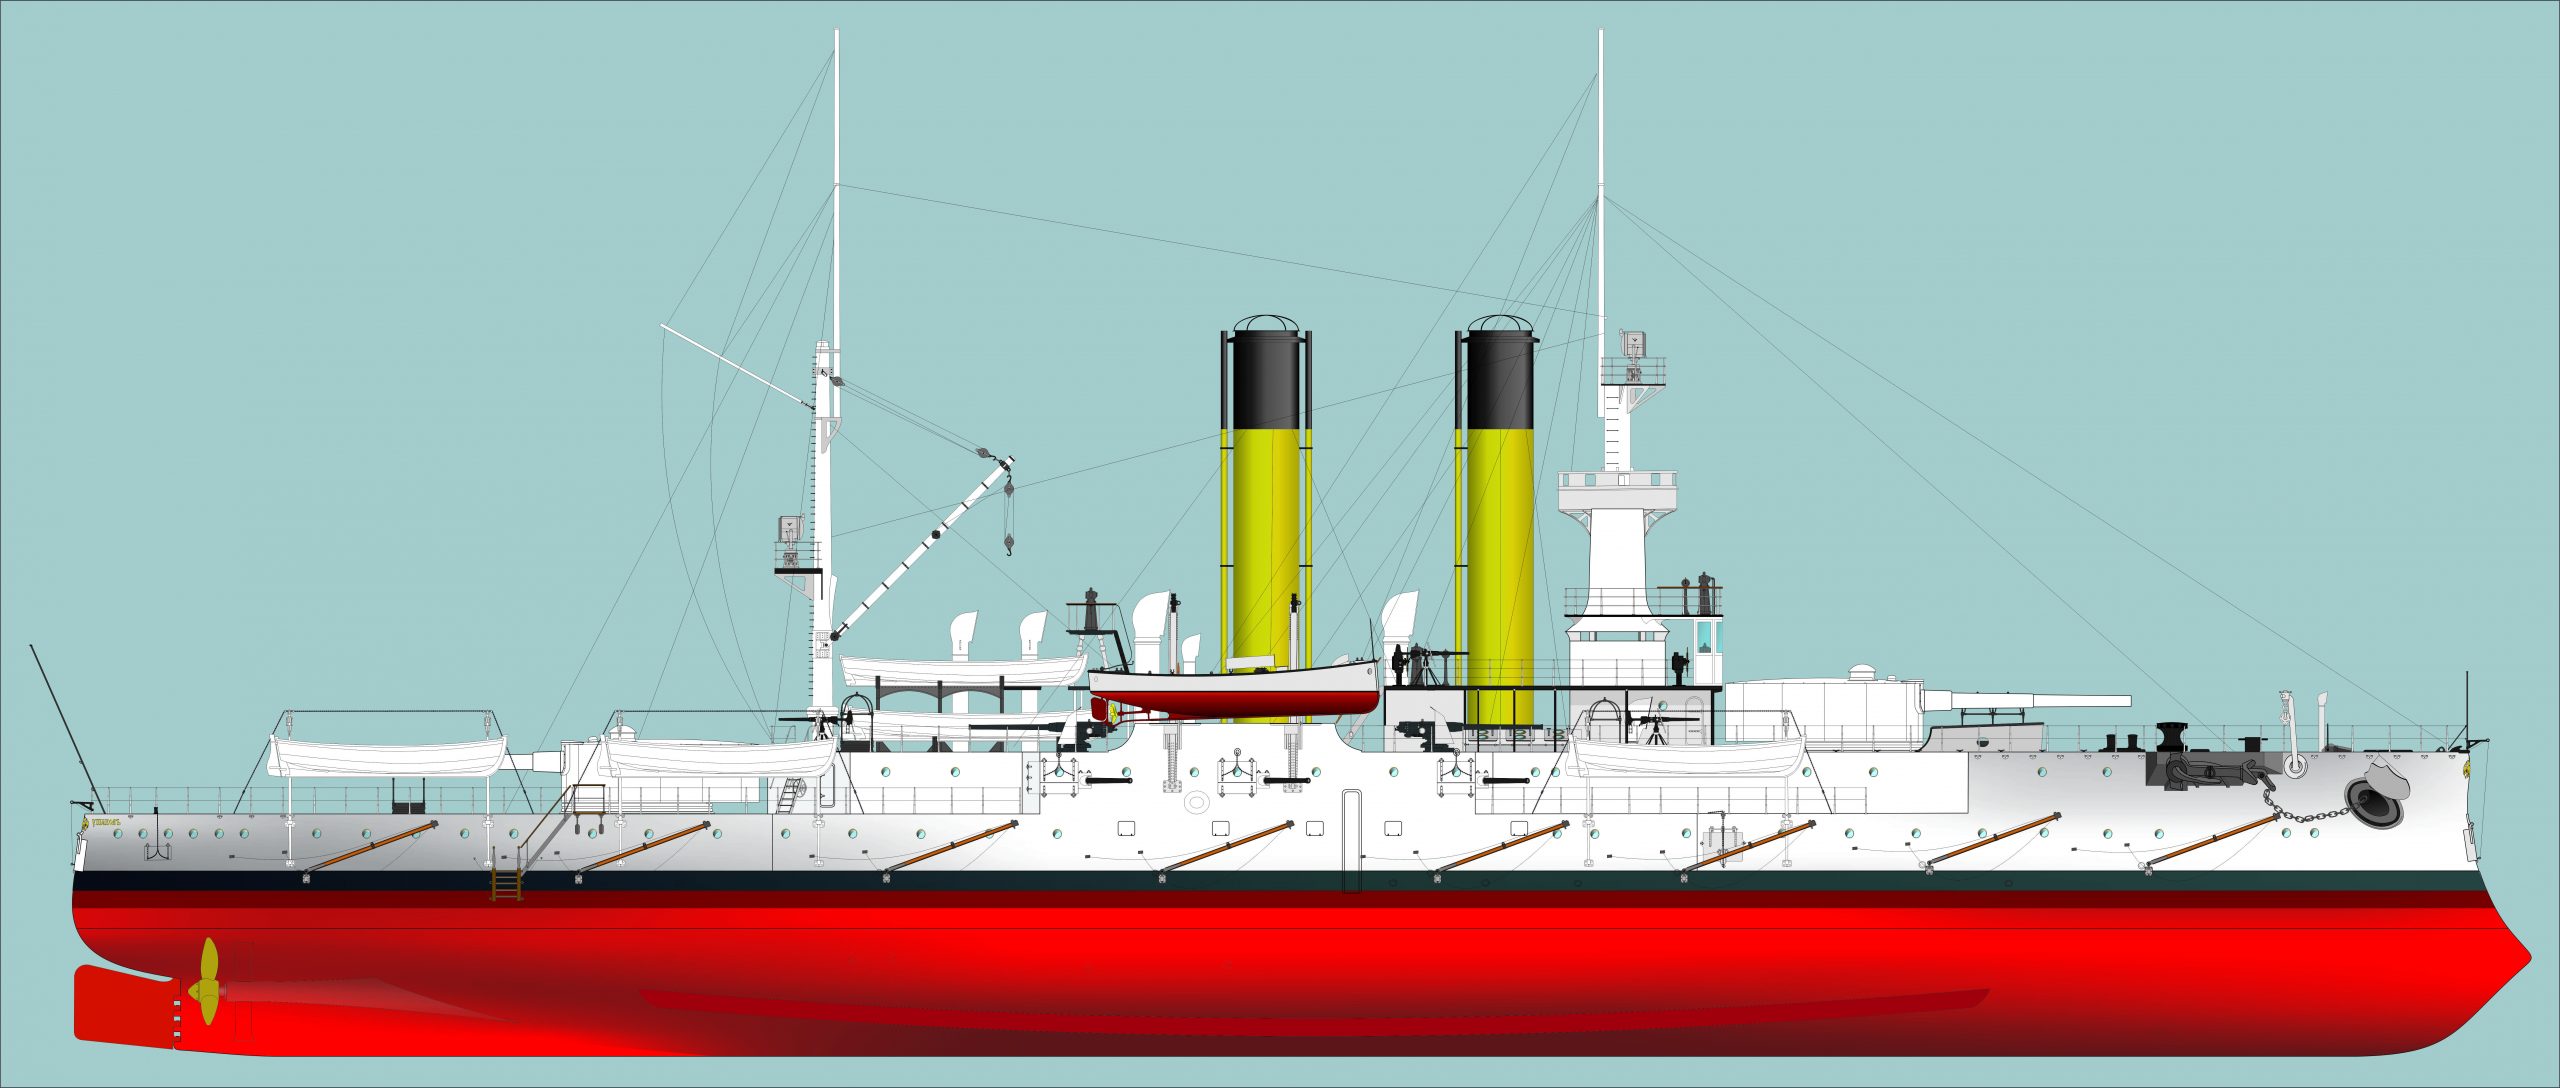 Крейсера 2 ранга типа Адмирал Бутаков. 5 единиц АИ